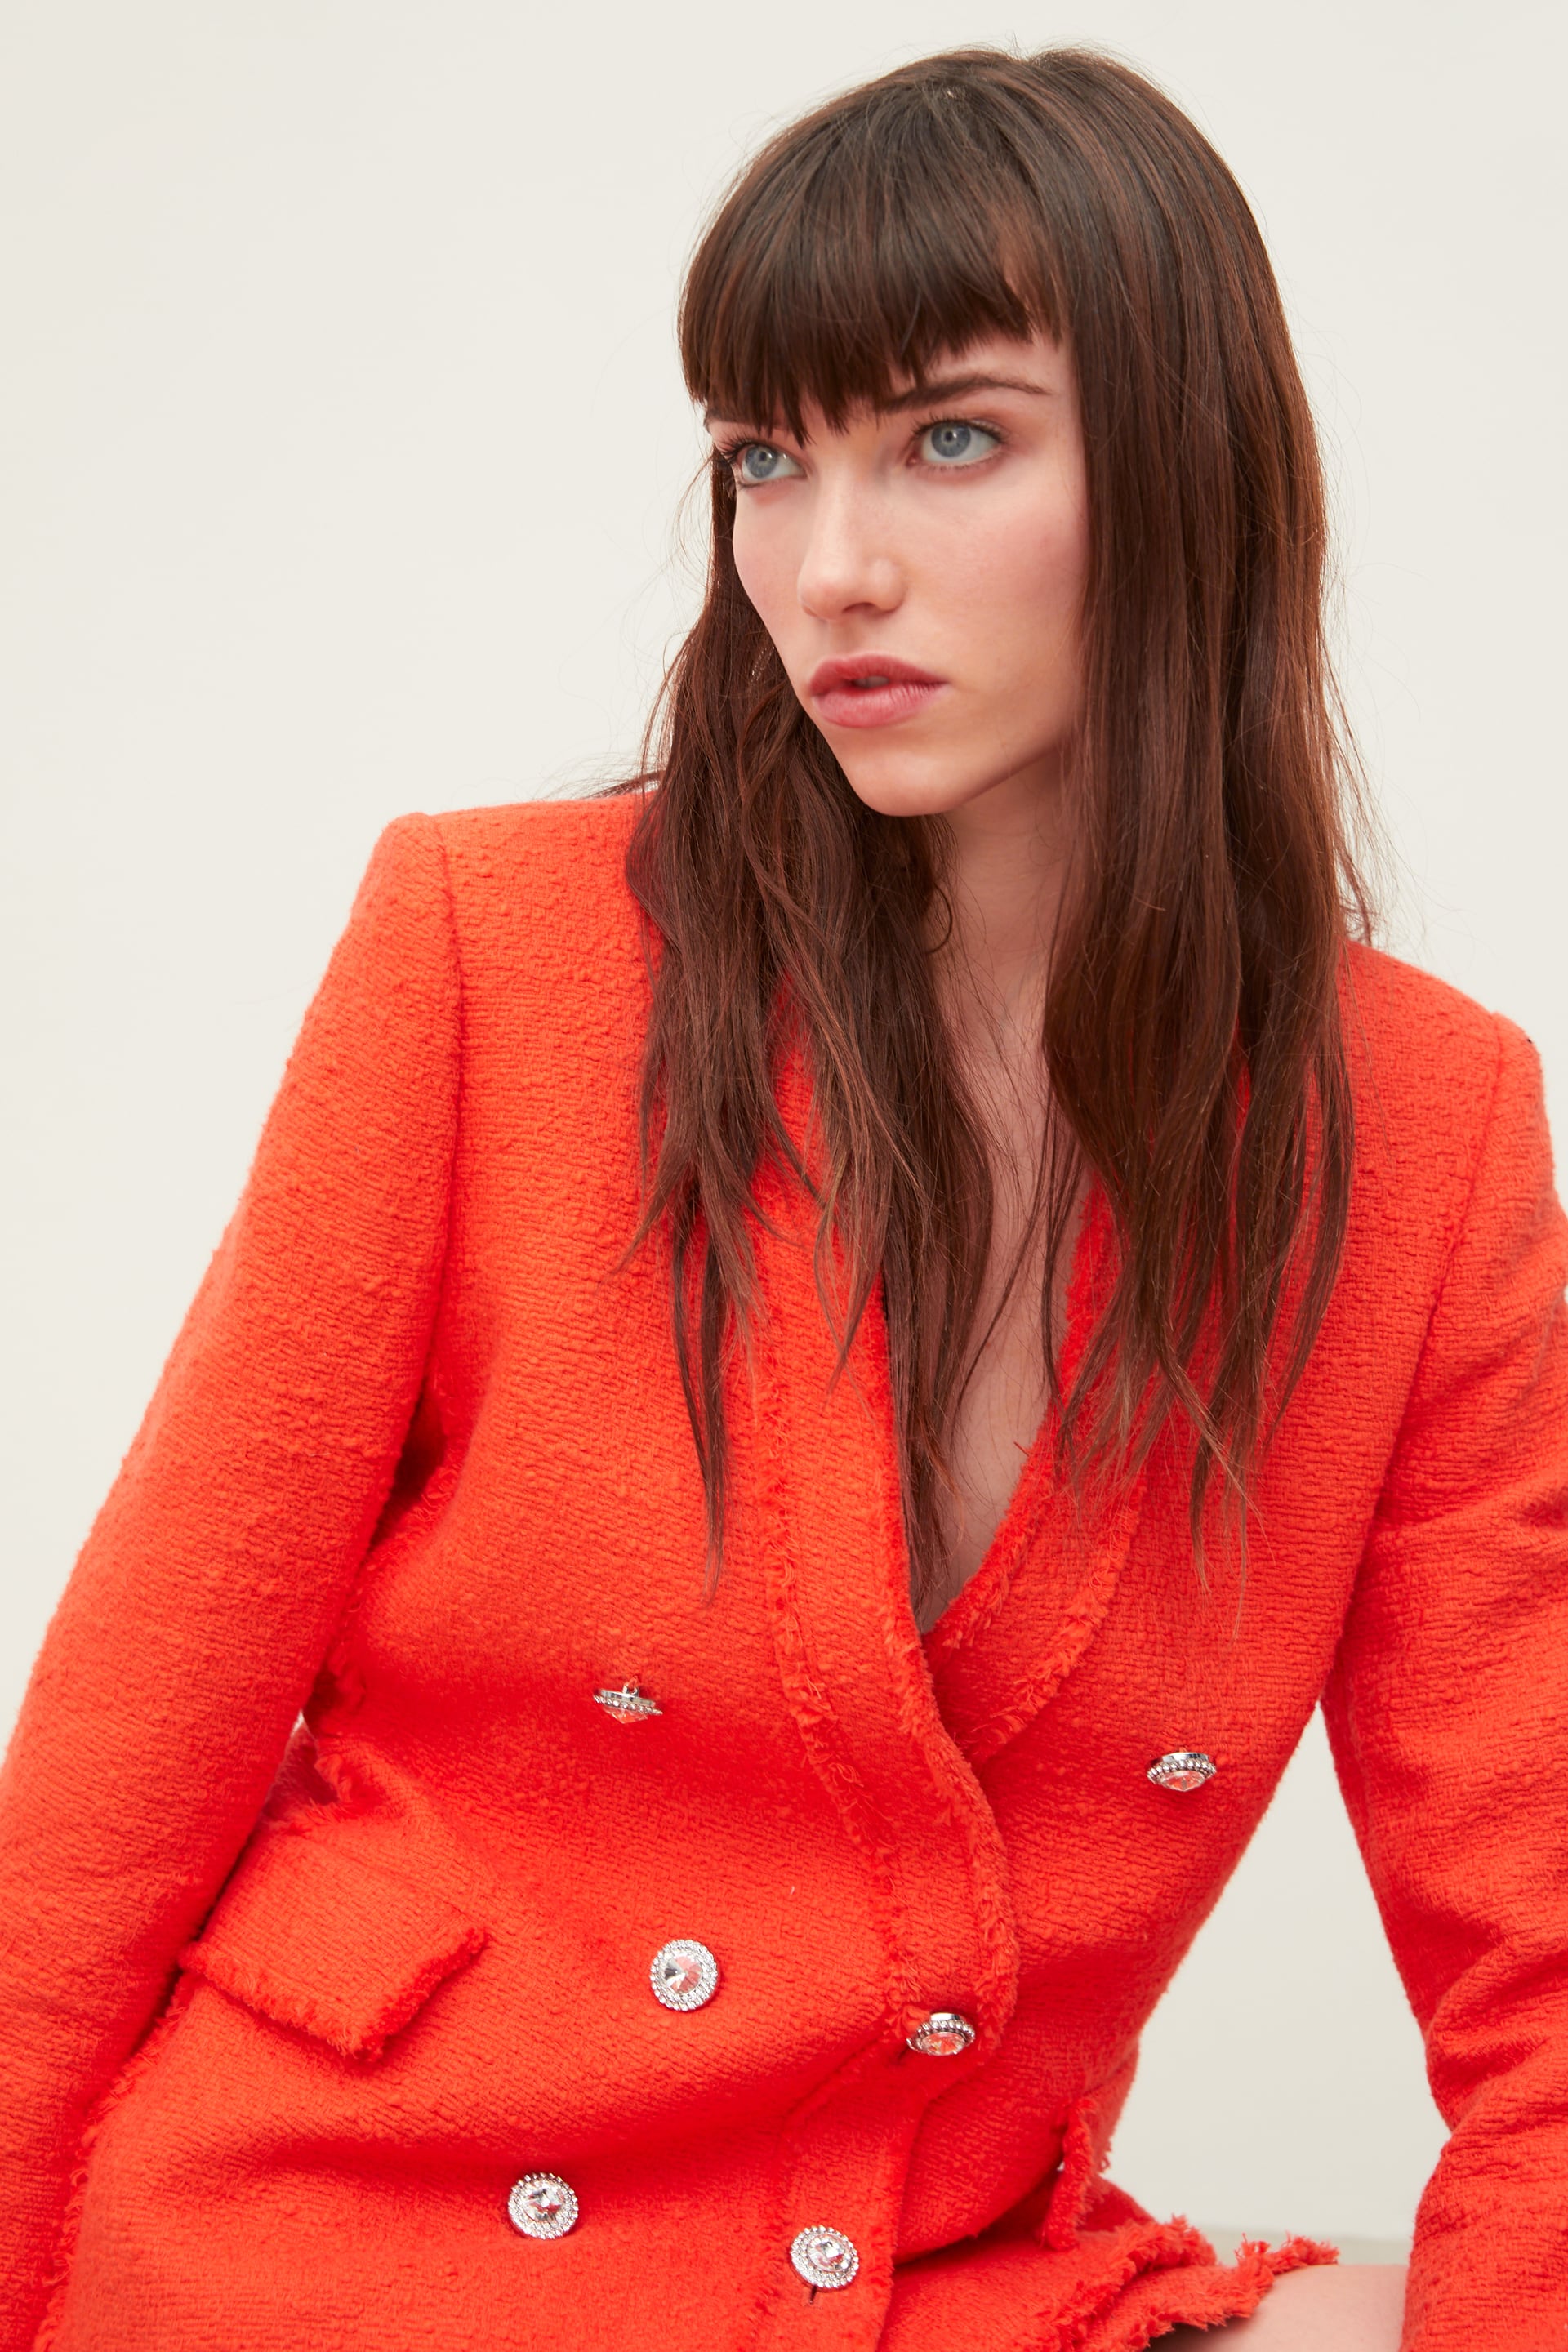 zara orange tweed jacket